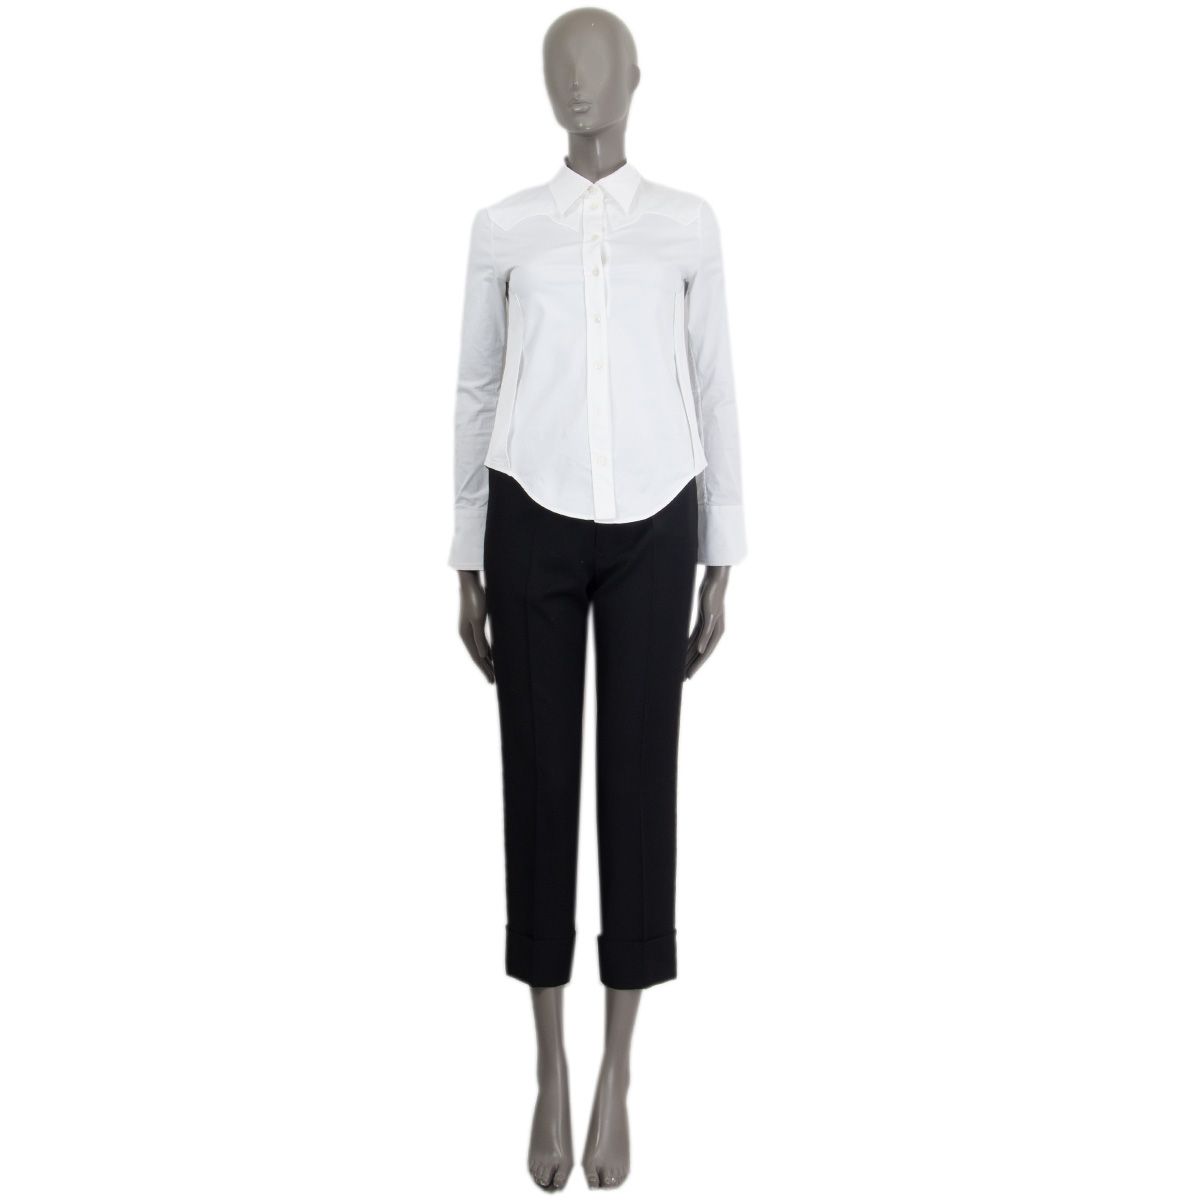 Louis Vuitton - Editorial, 3/4 Sleeve Black/White Collar Button Up